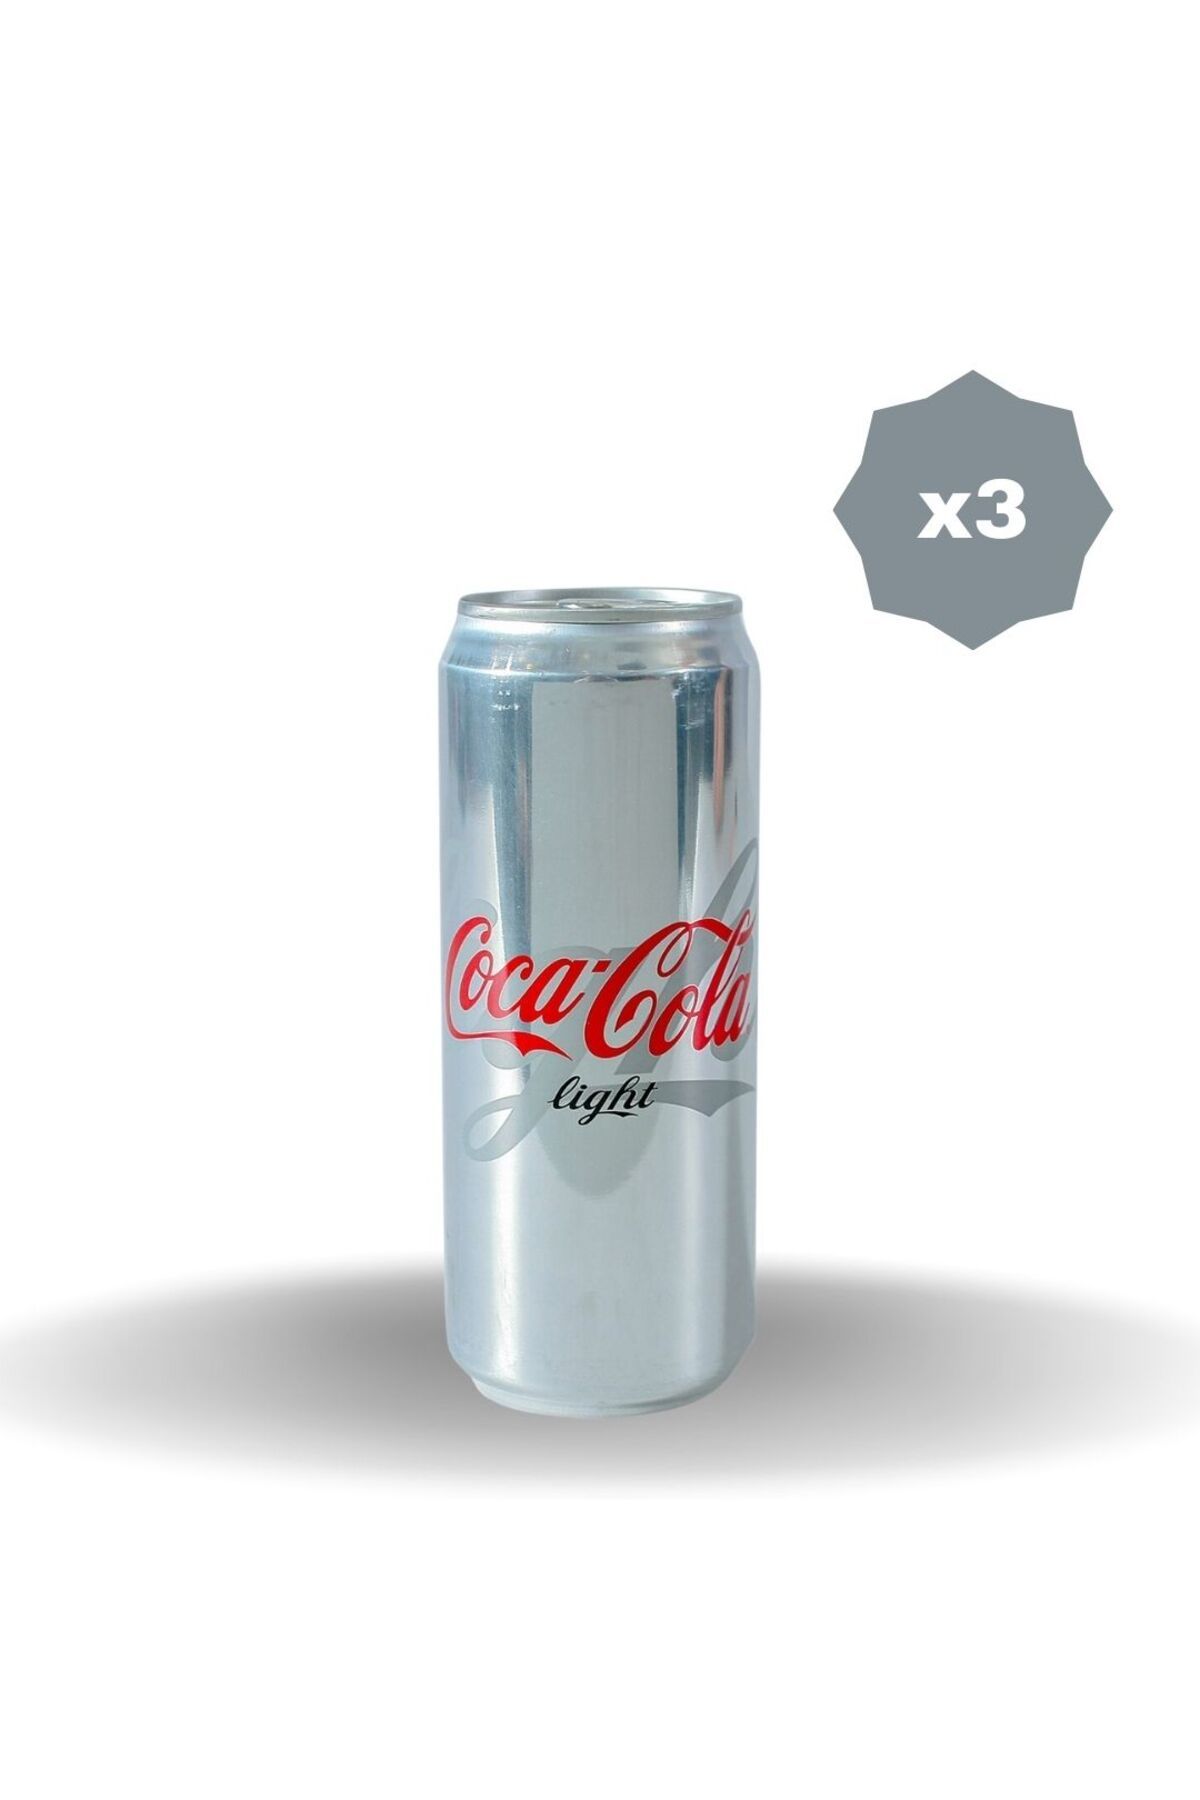 Coca-Cola COCA COLA LİGHT KUTU 330 ML X 3 ADET